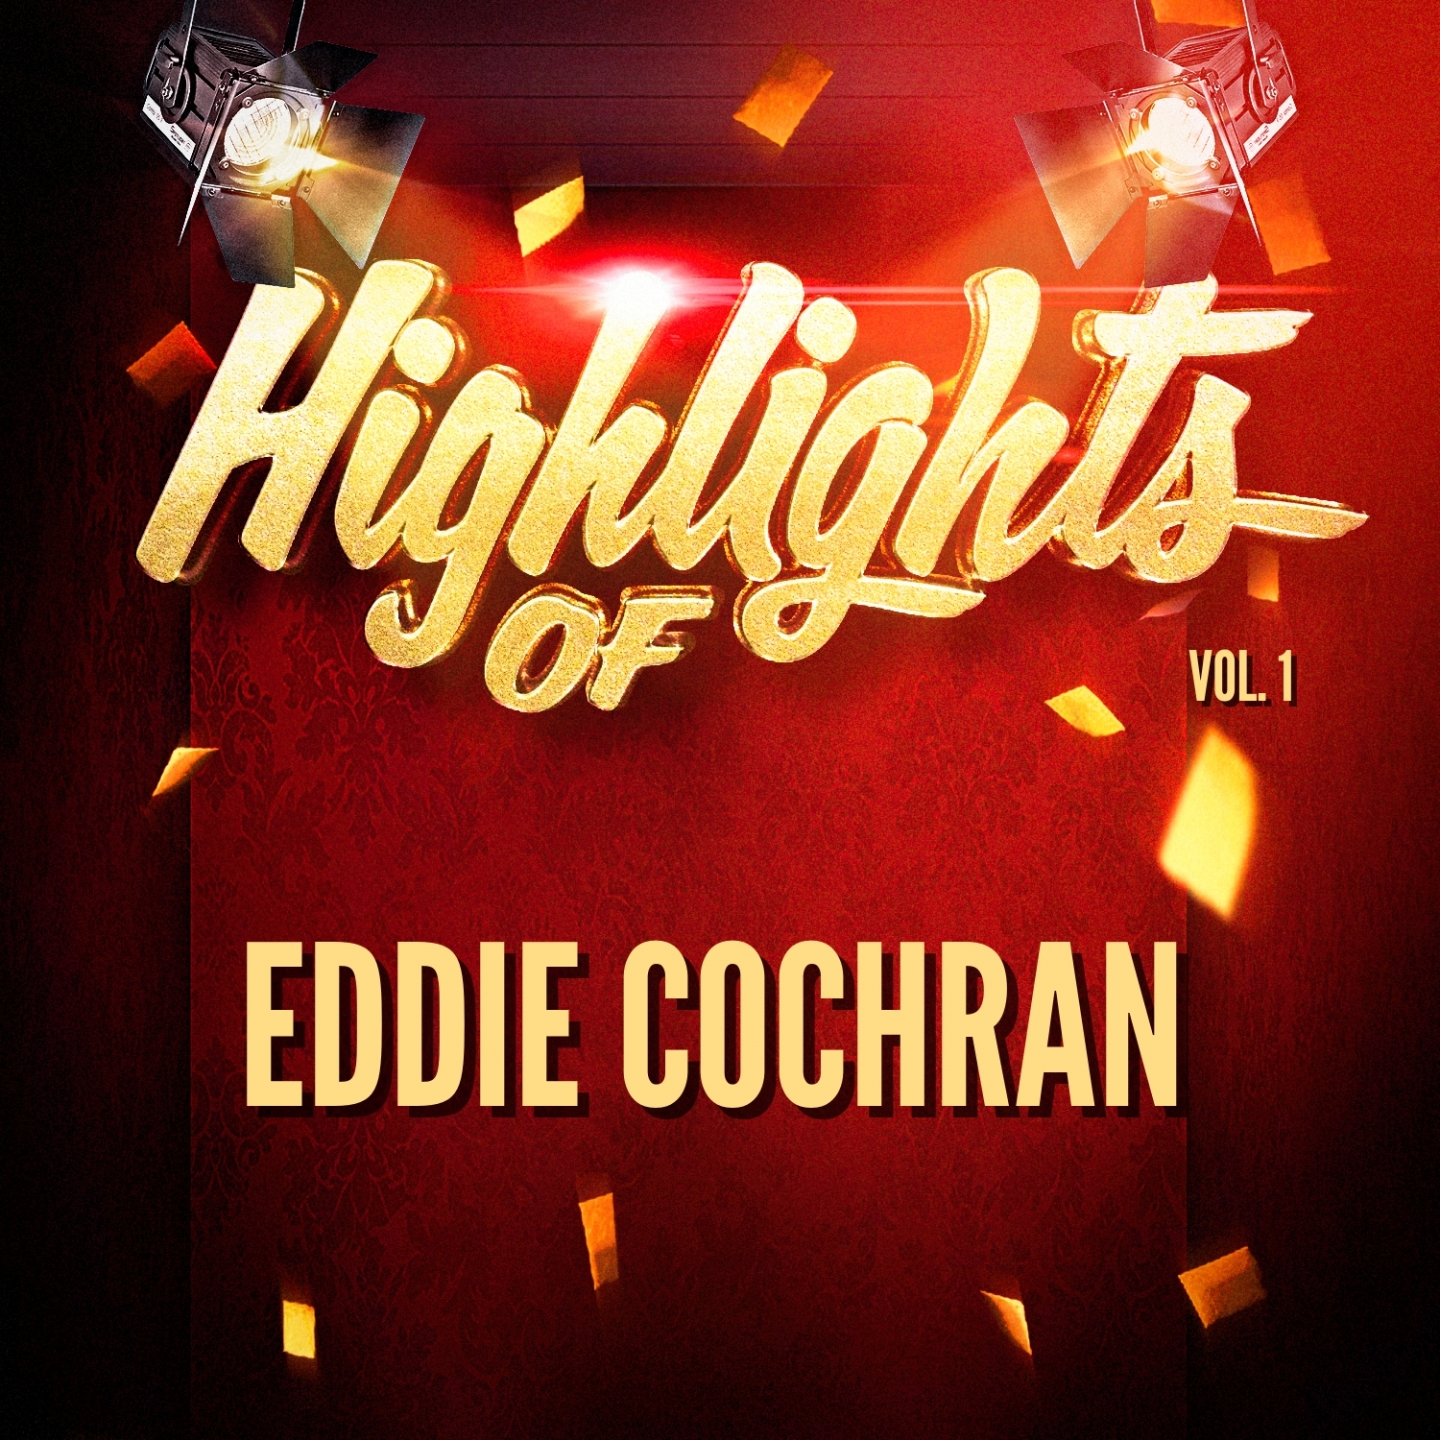 Highlights of Eddie Cochran, Vol. 1